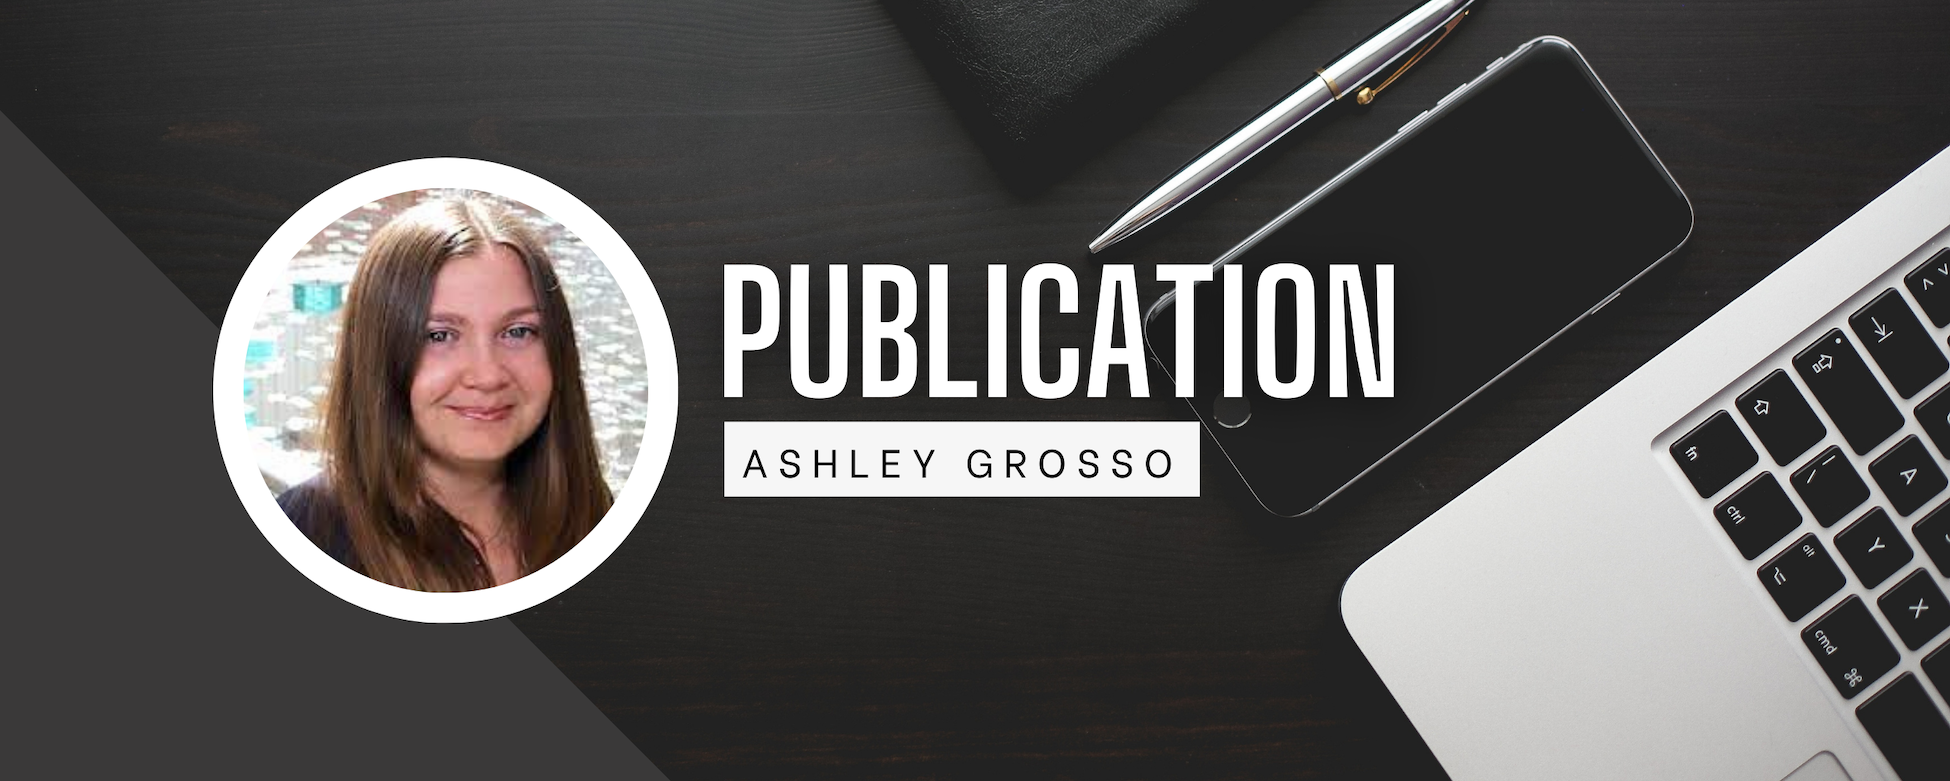 Ashley Grosso Publications